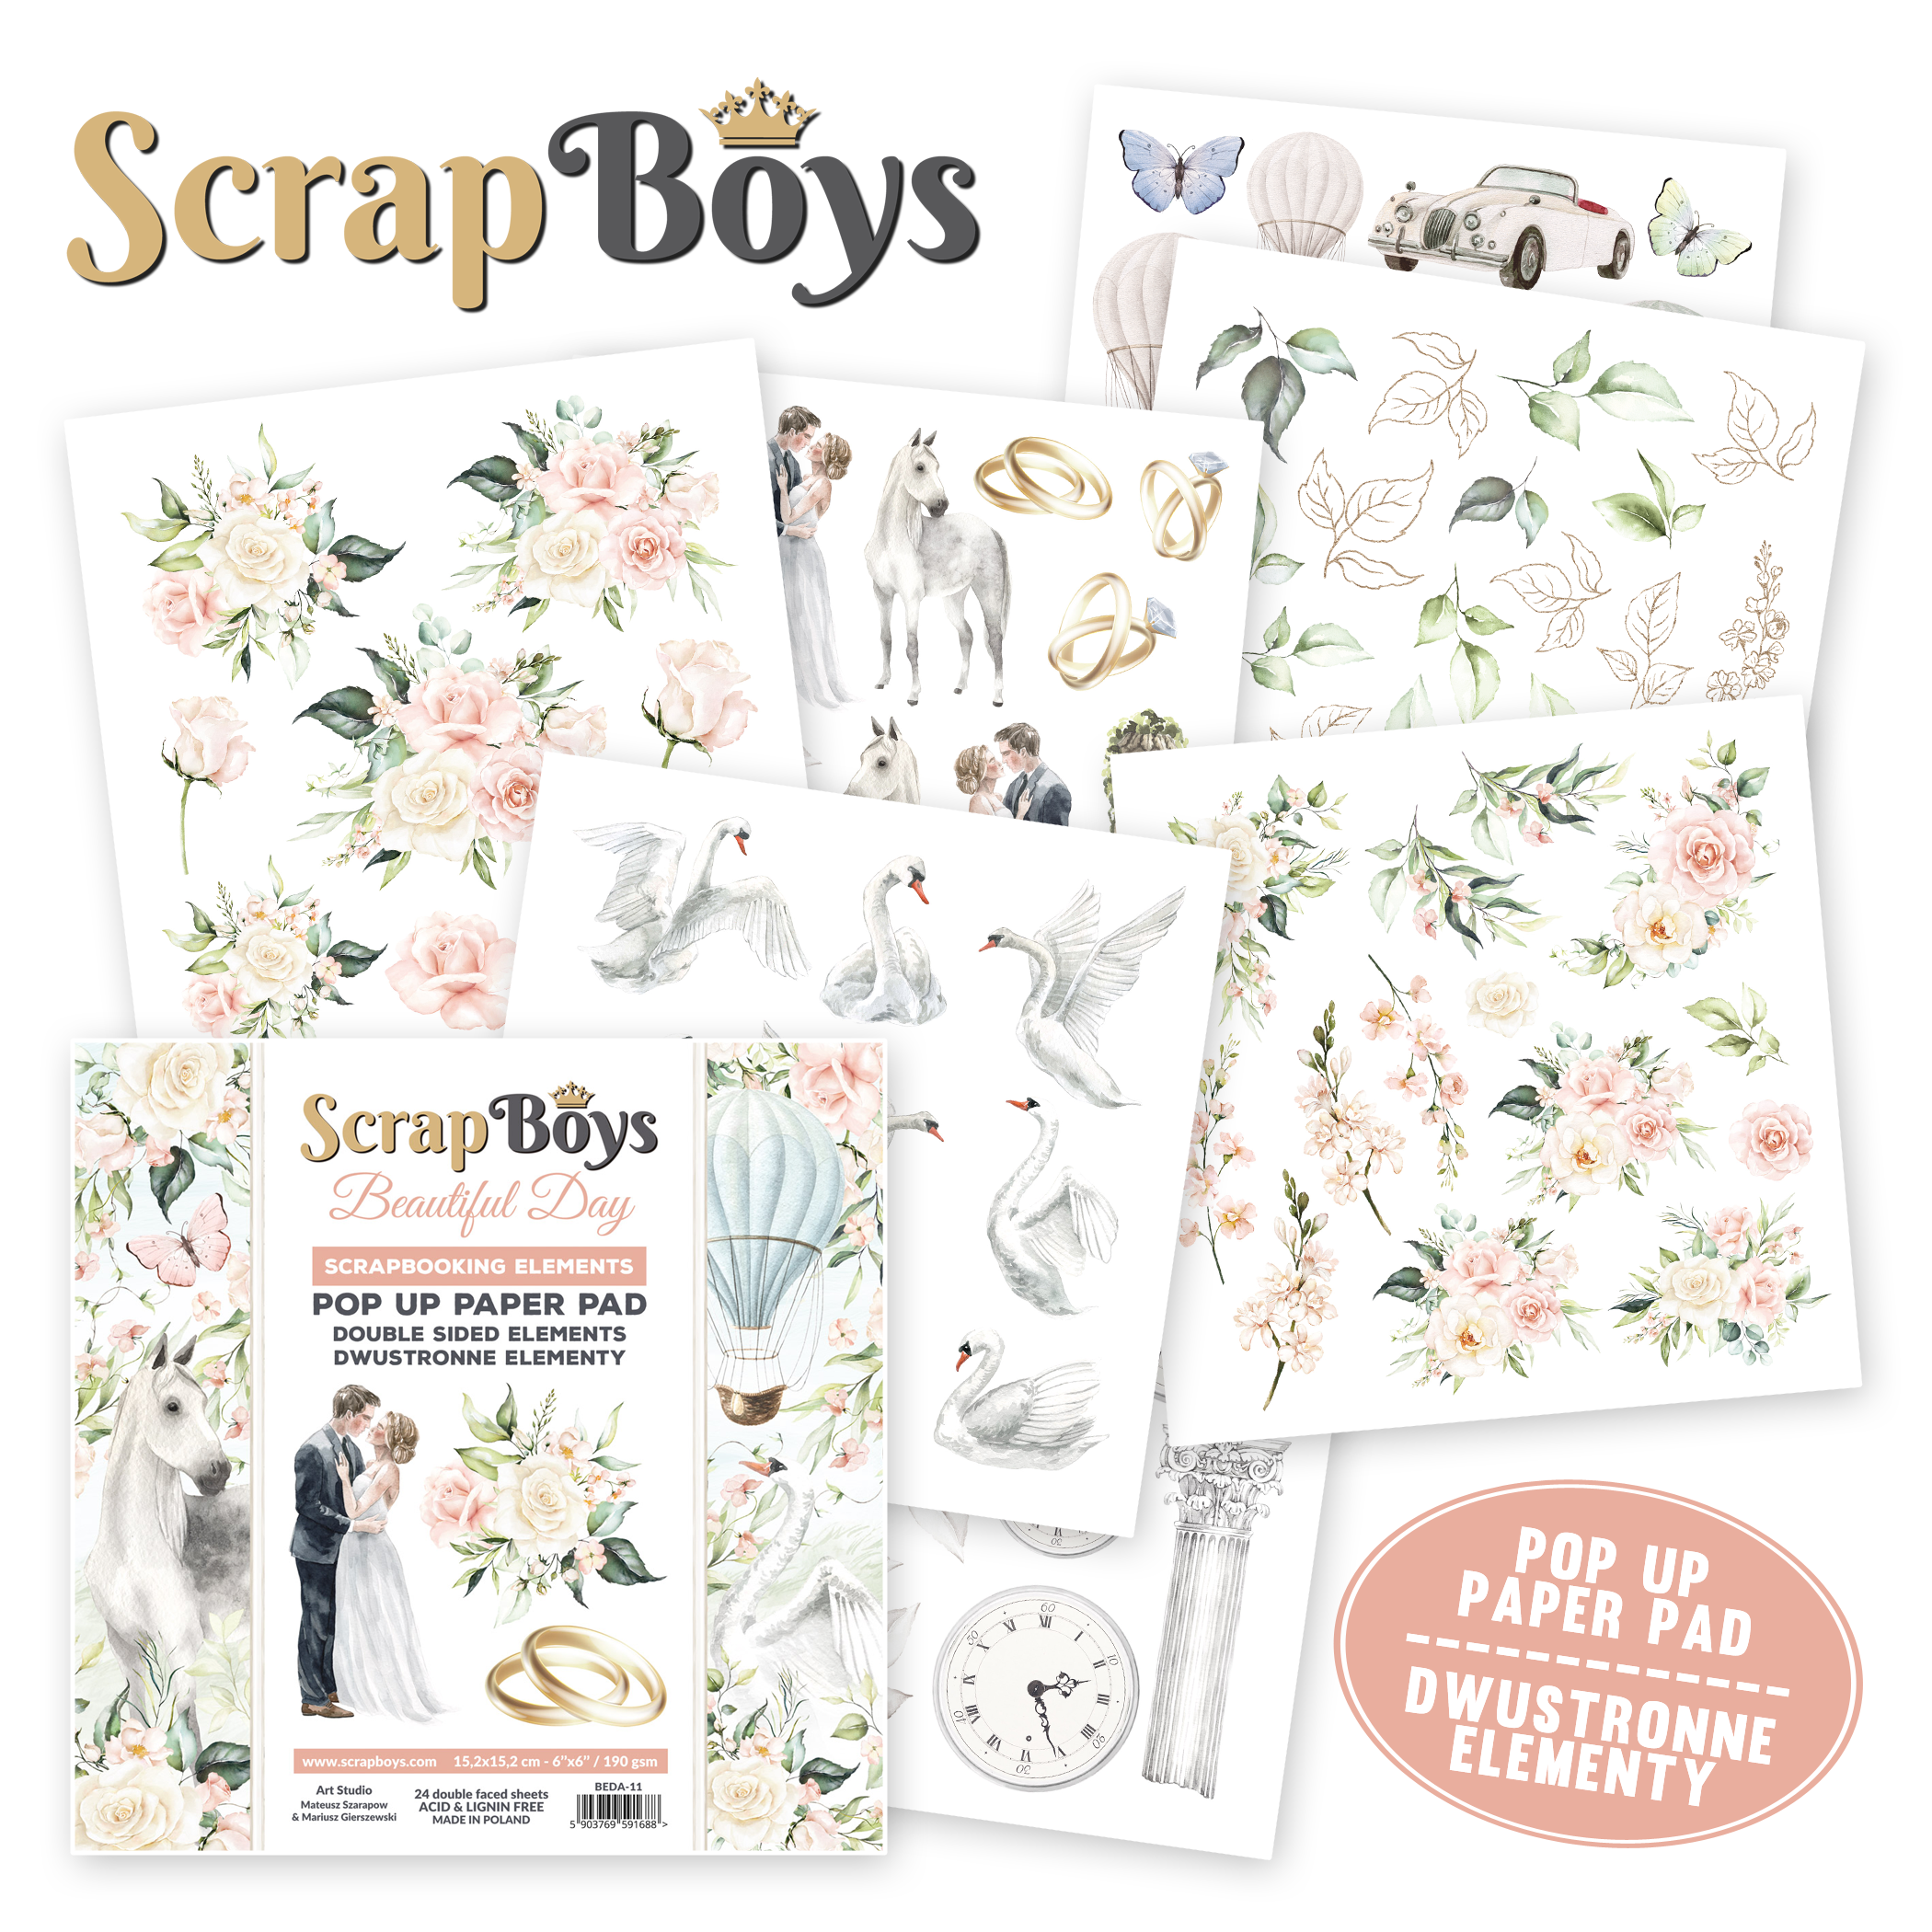  BEDA-11 Bloczek papierów Pop Up Paper pad 15,2x15,2 cm Scrap Boys - Beautiful Day